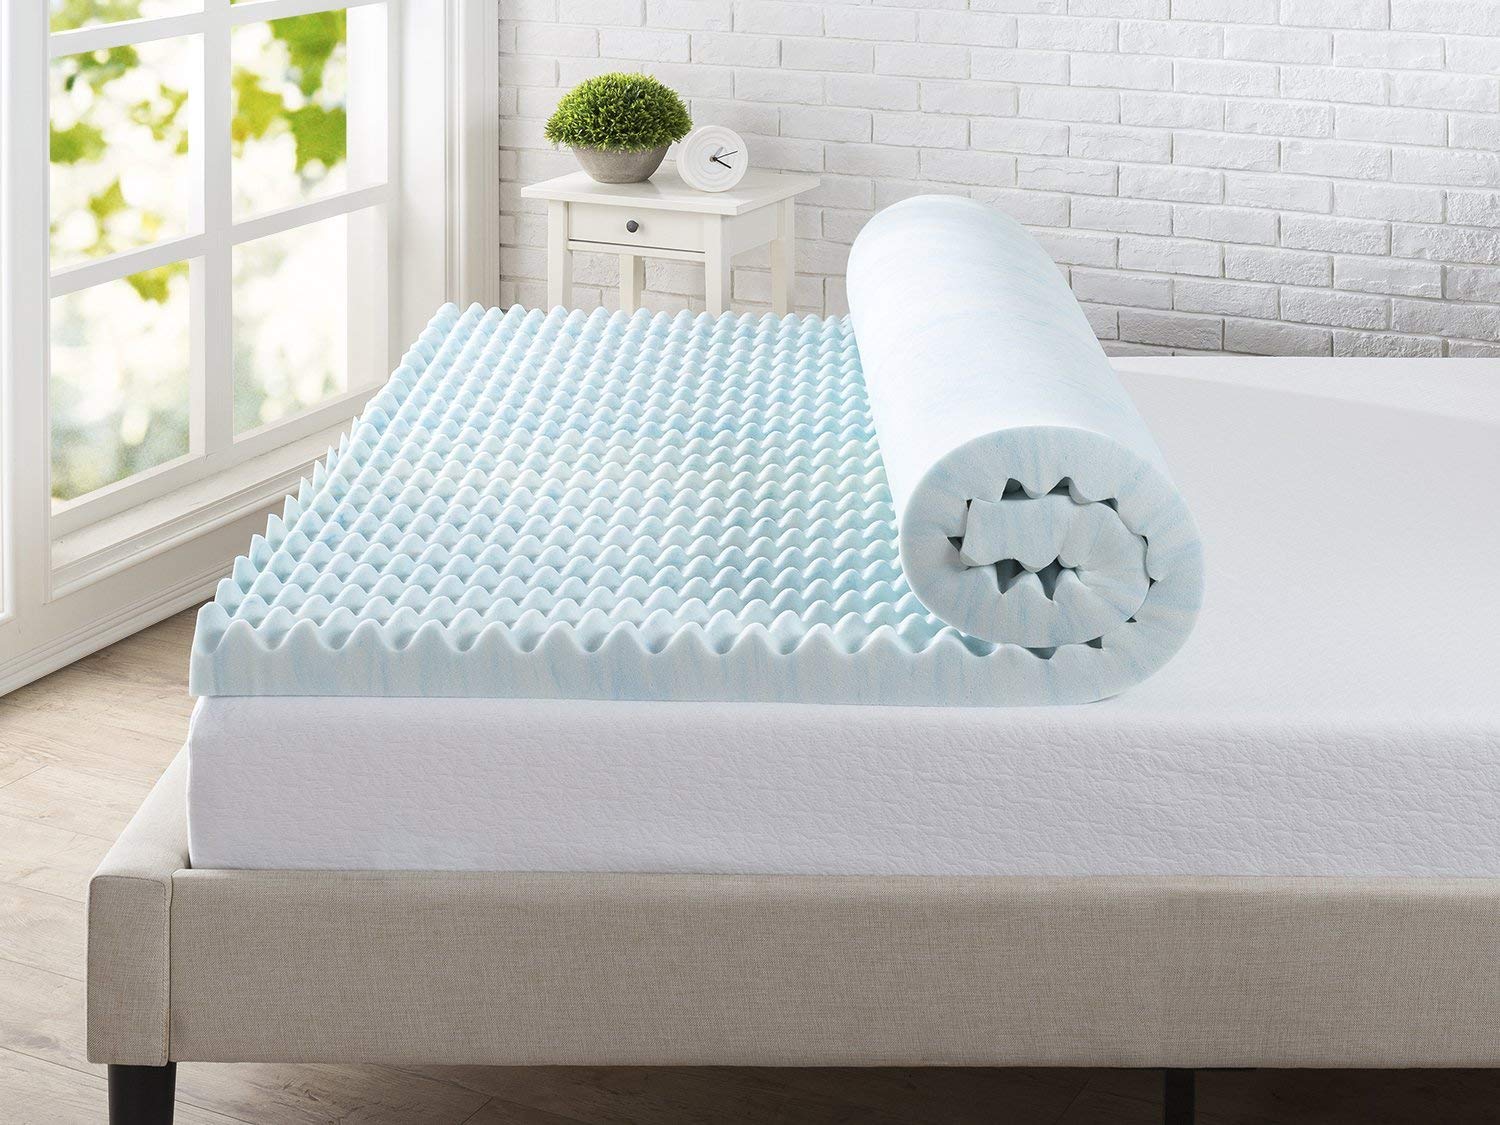 firm mattress with soft topper